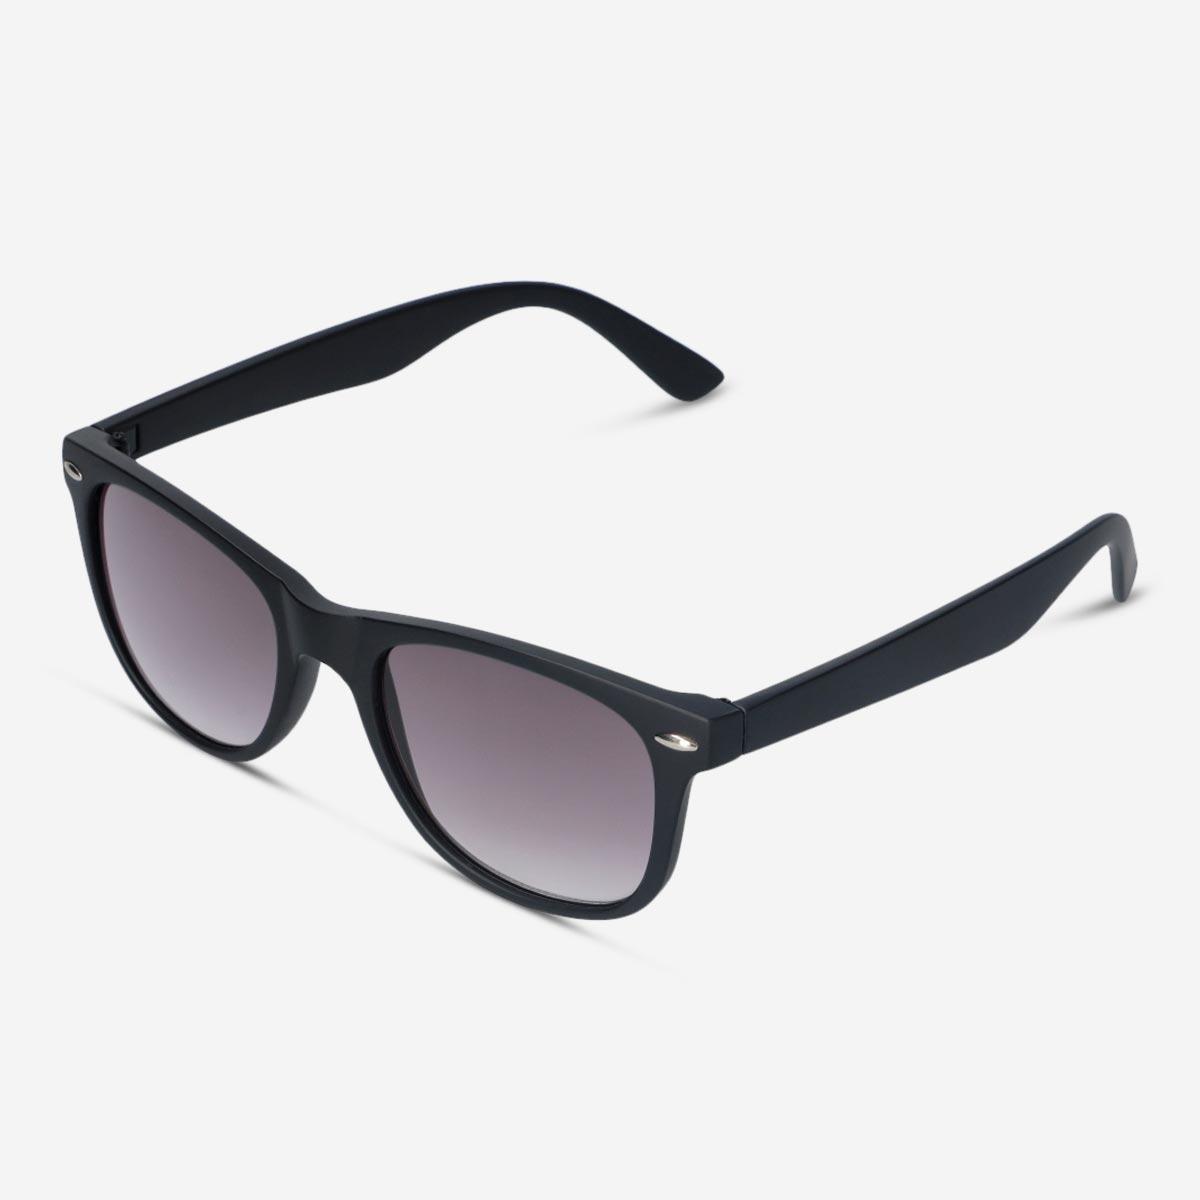 Black reading sunglasses. + 2.5